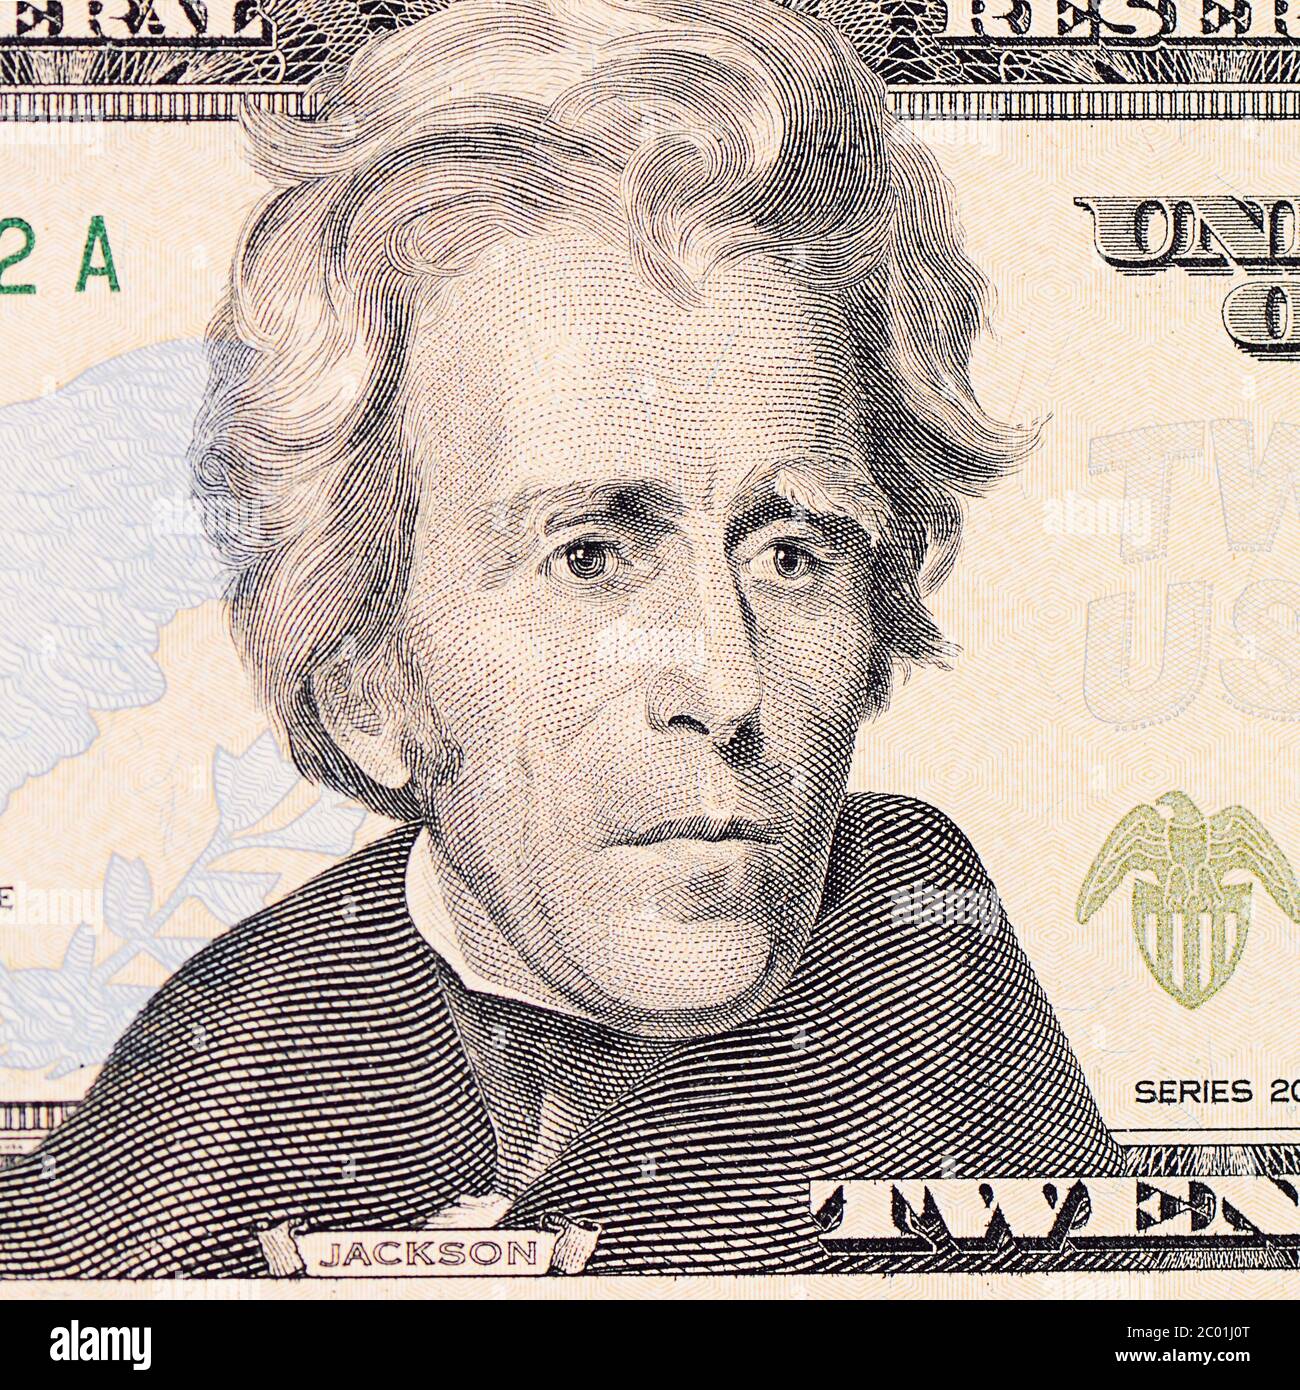 The face Jackson the dollar bill Stock Photo